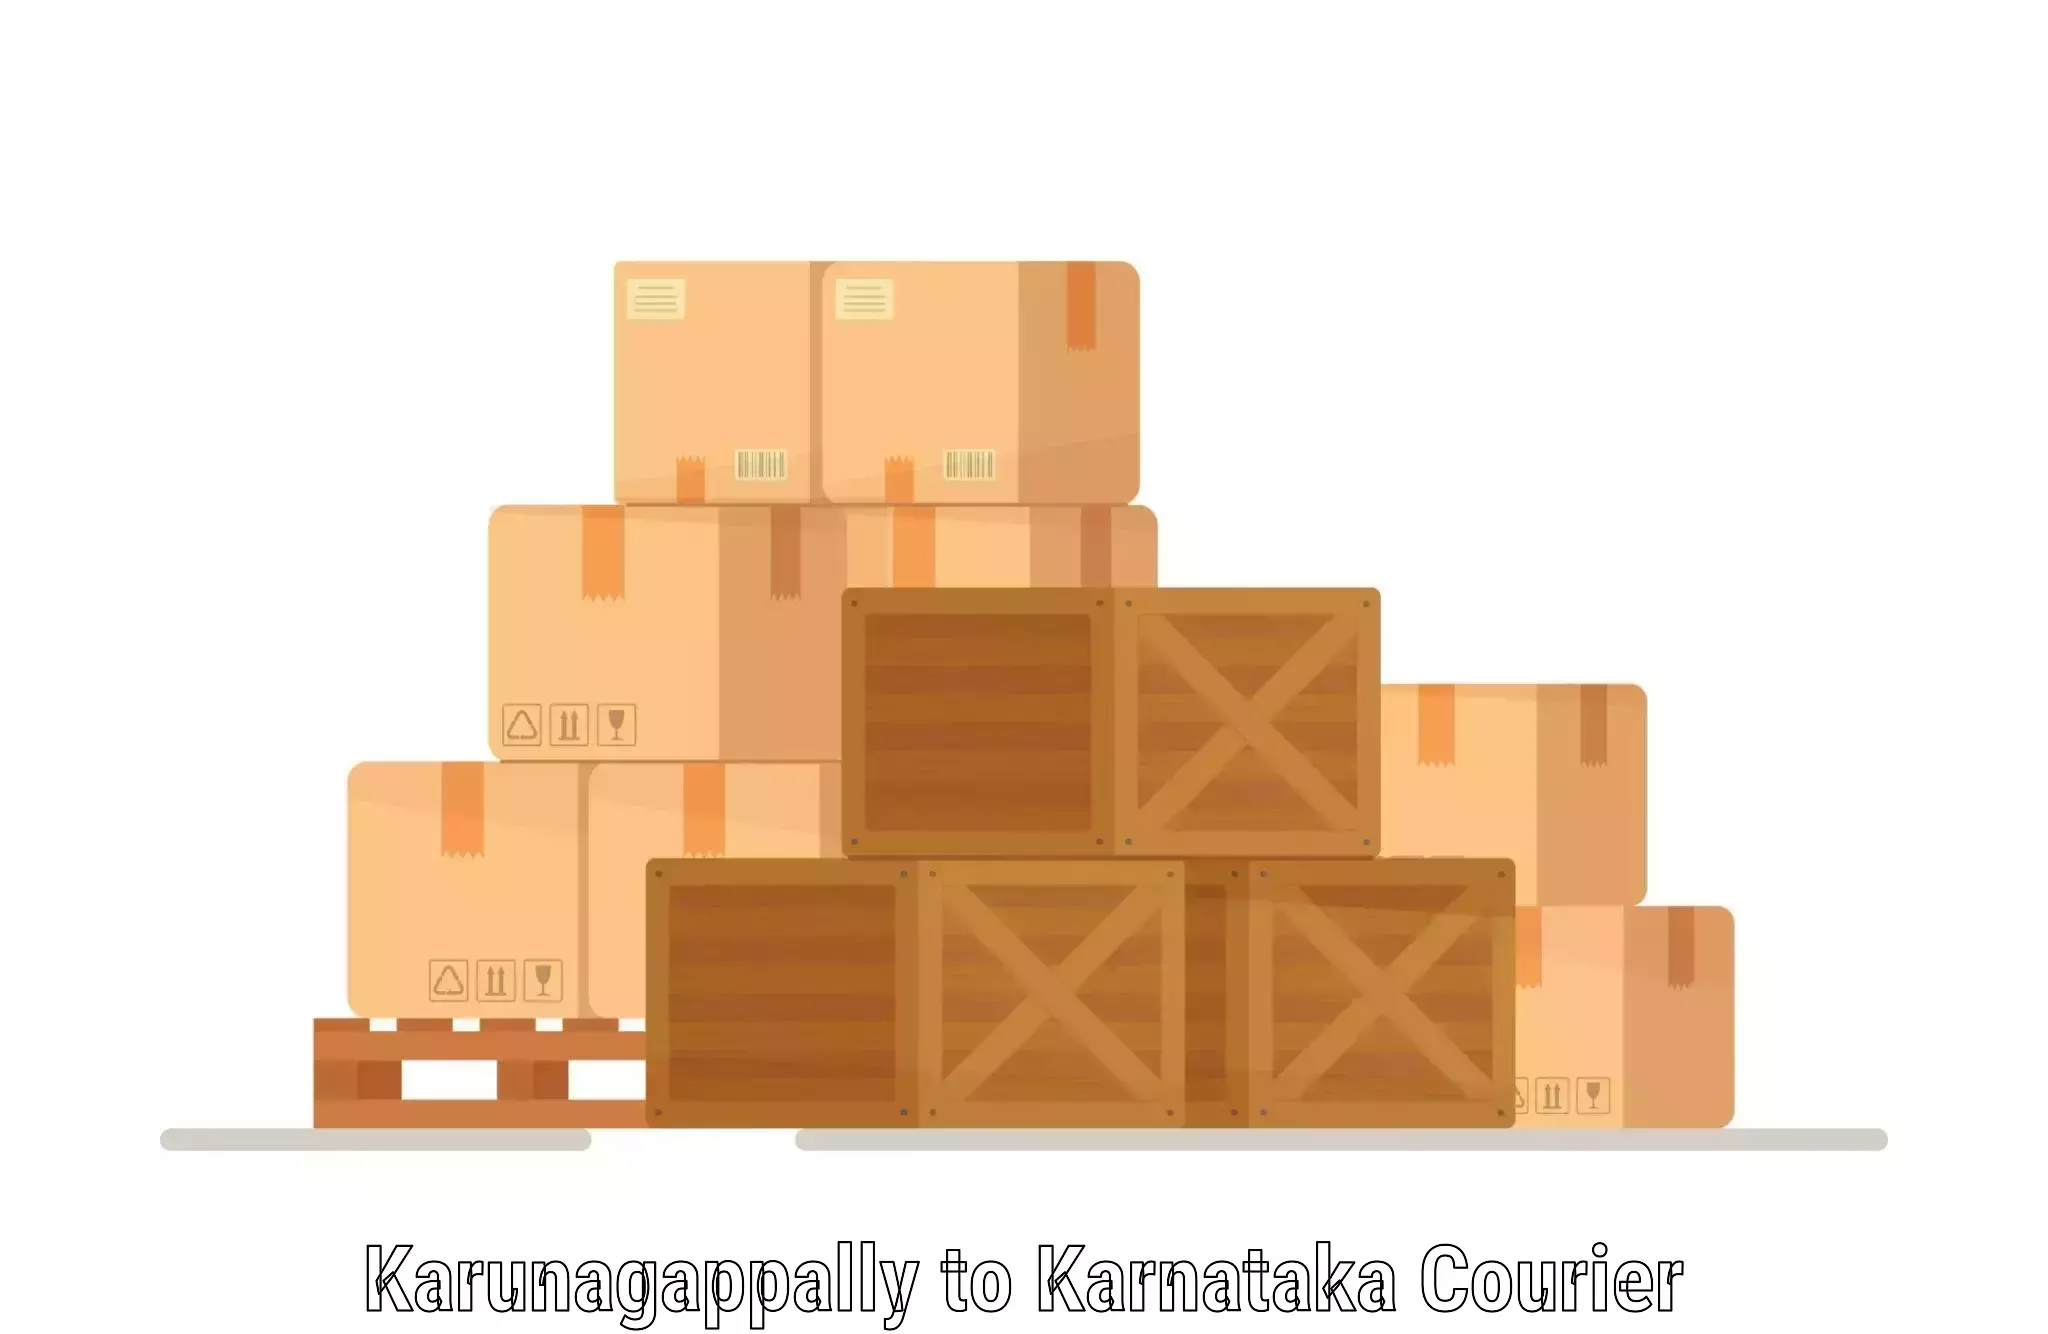 Door-to-door freight service Karunagappally to Manipal